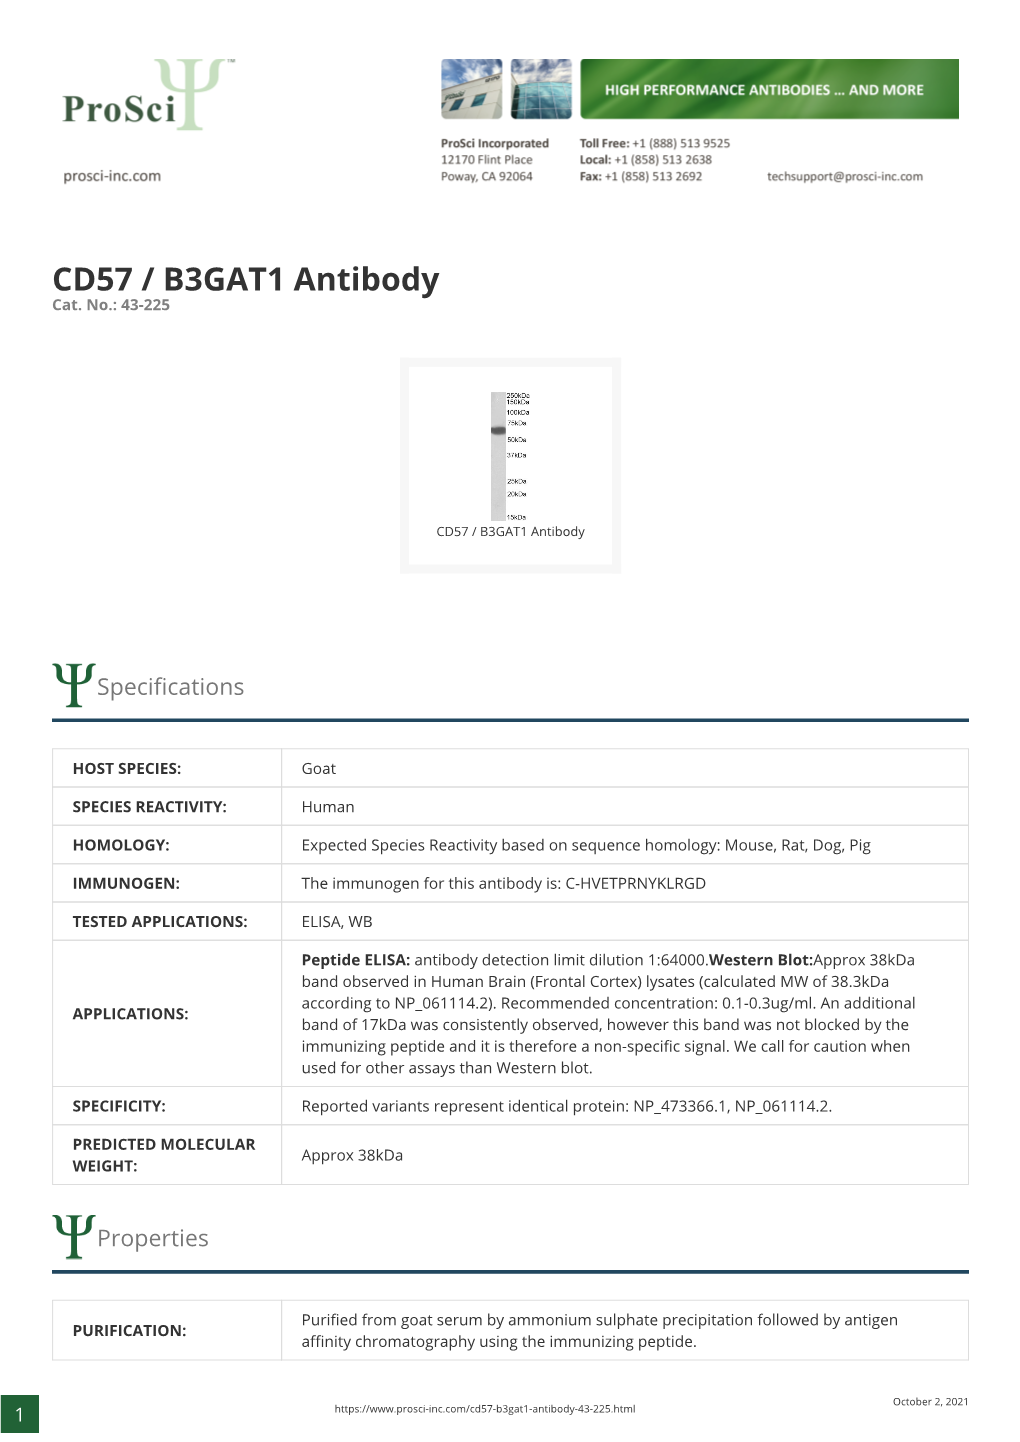 CD57 / B3GAT1 Antibody Cat